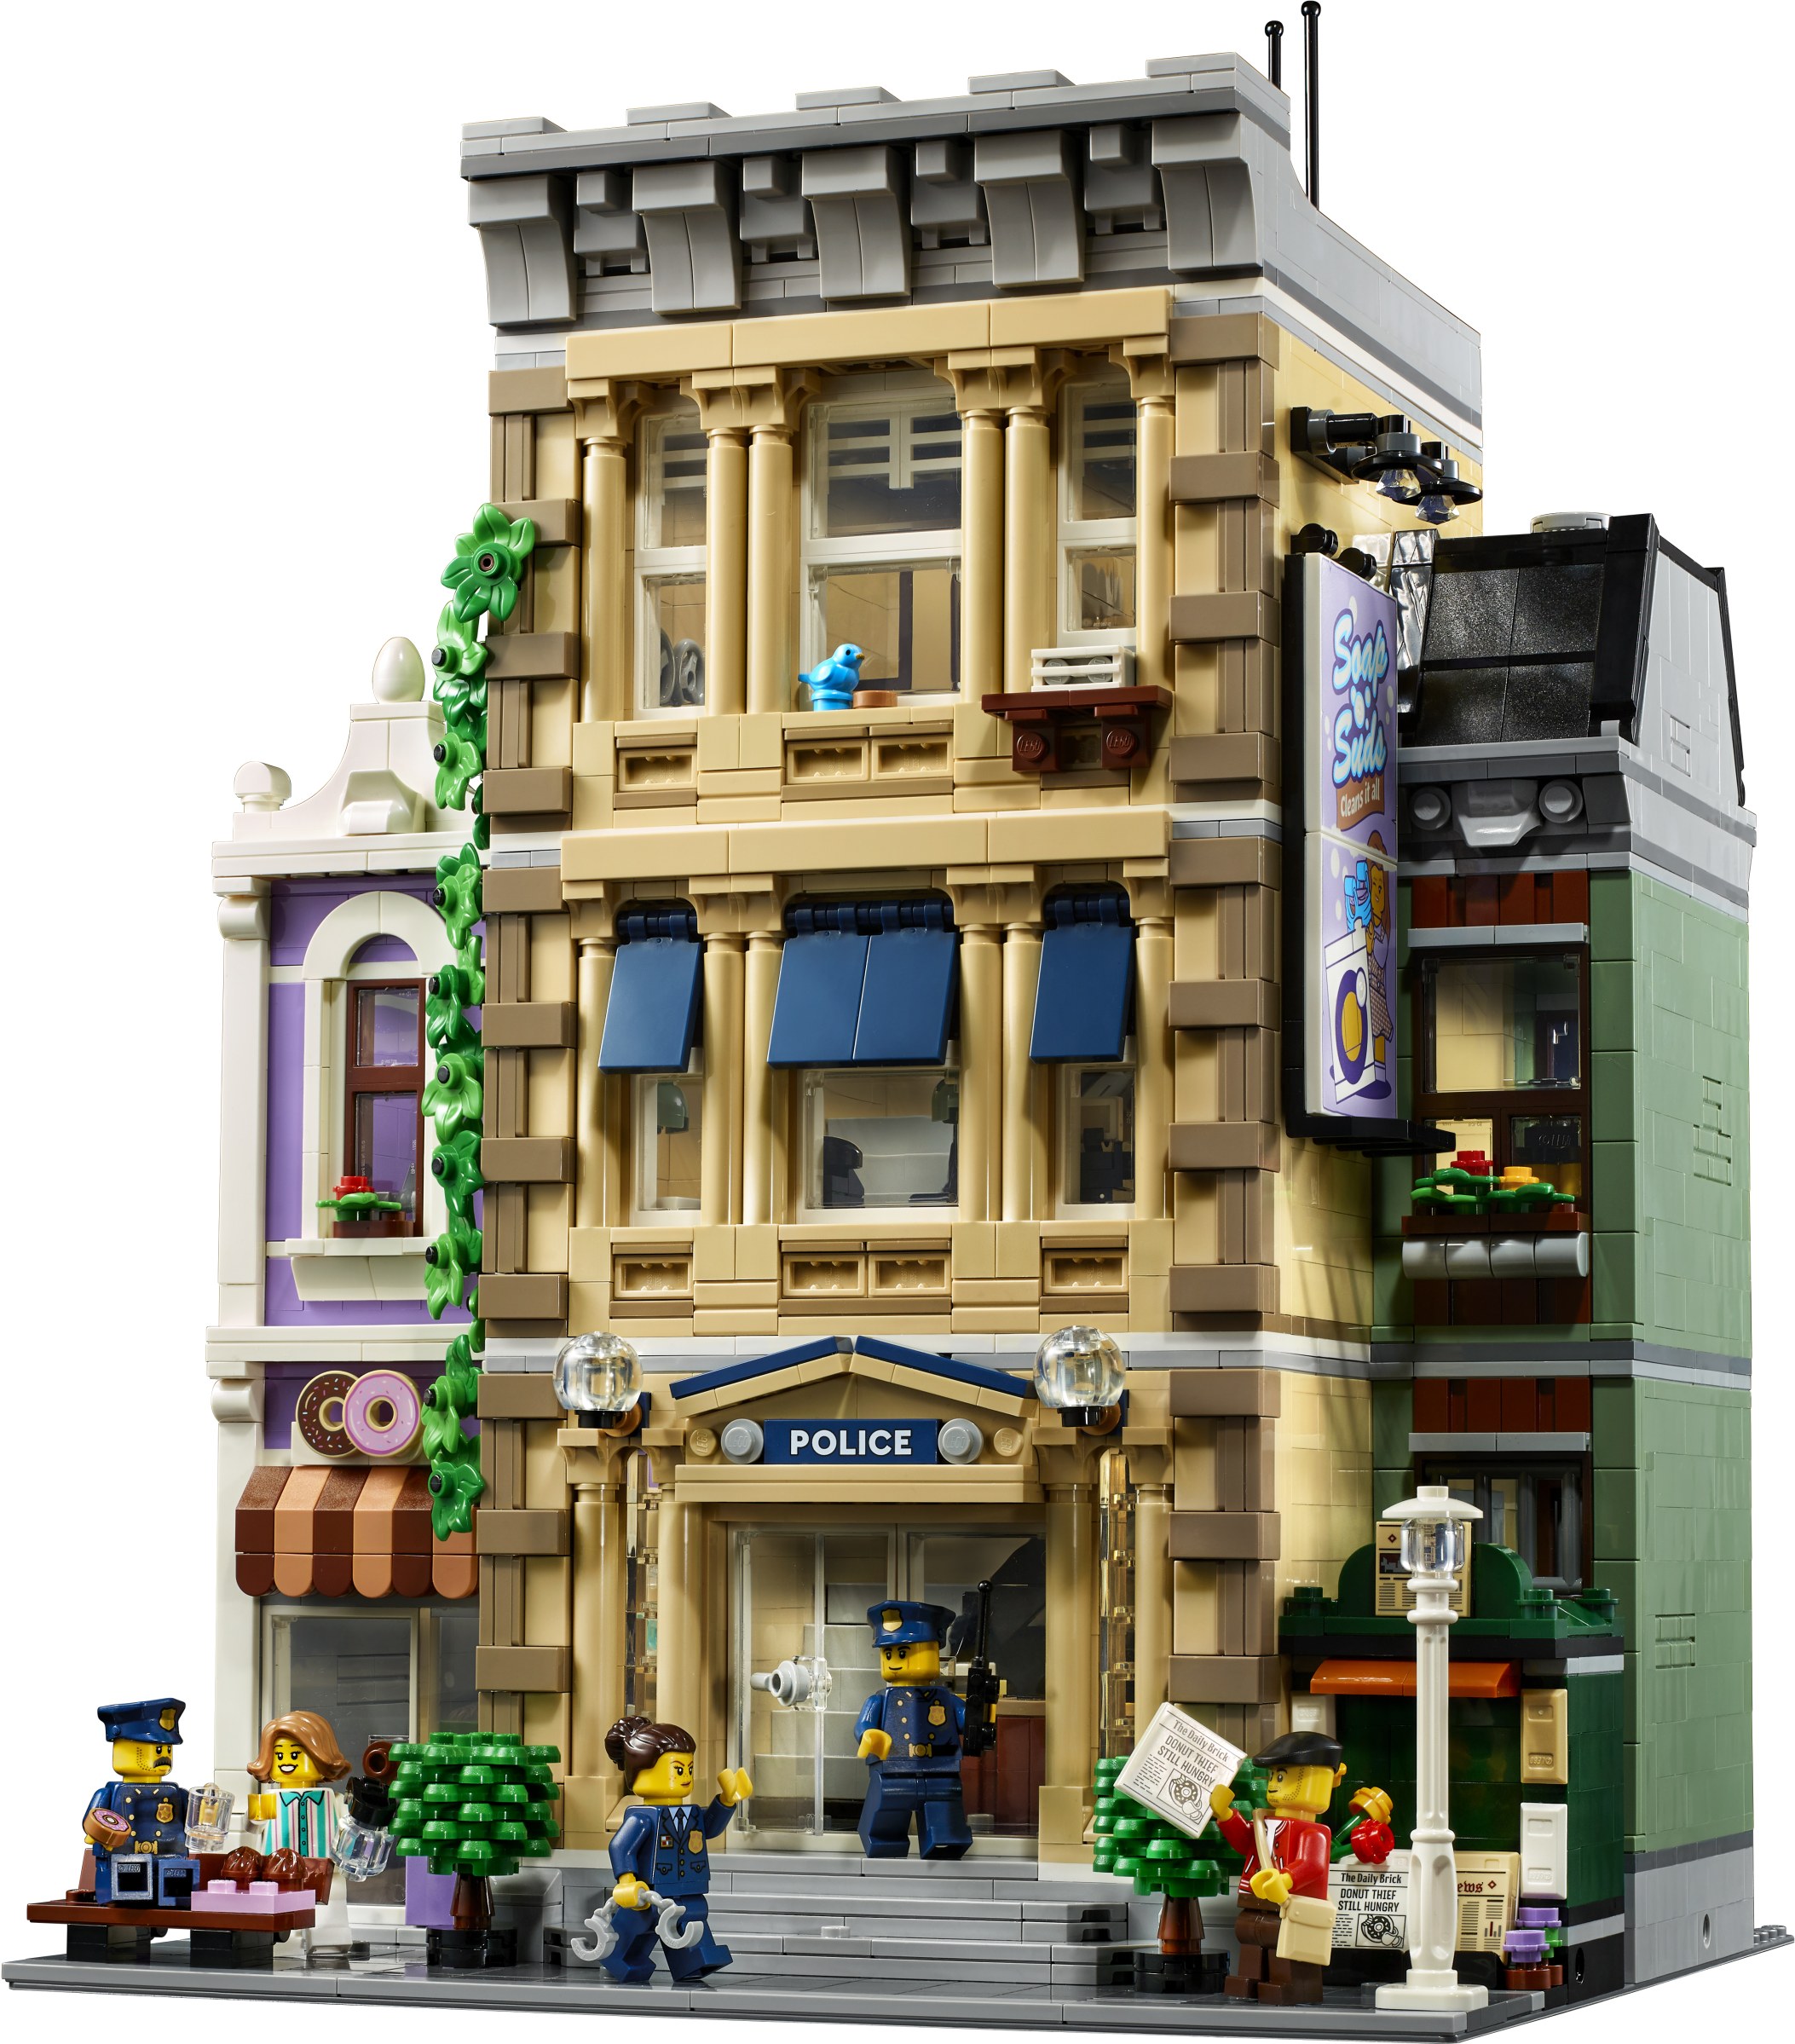 LEGO Creator Log Cabin Classic House Custom Modular Building /MOC